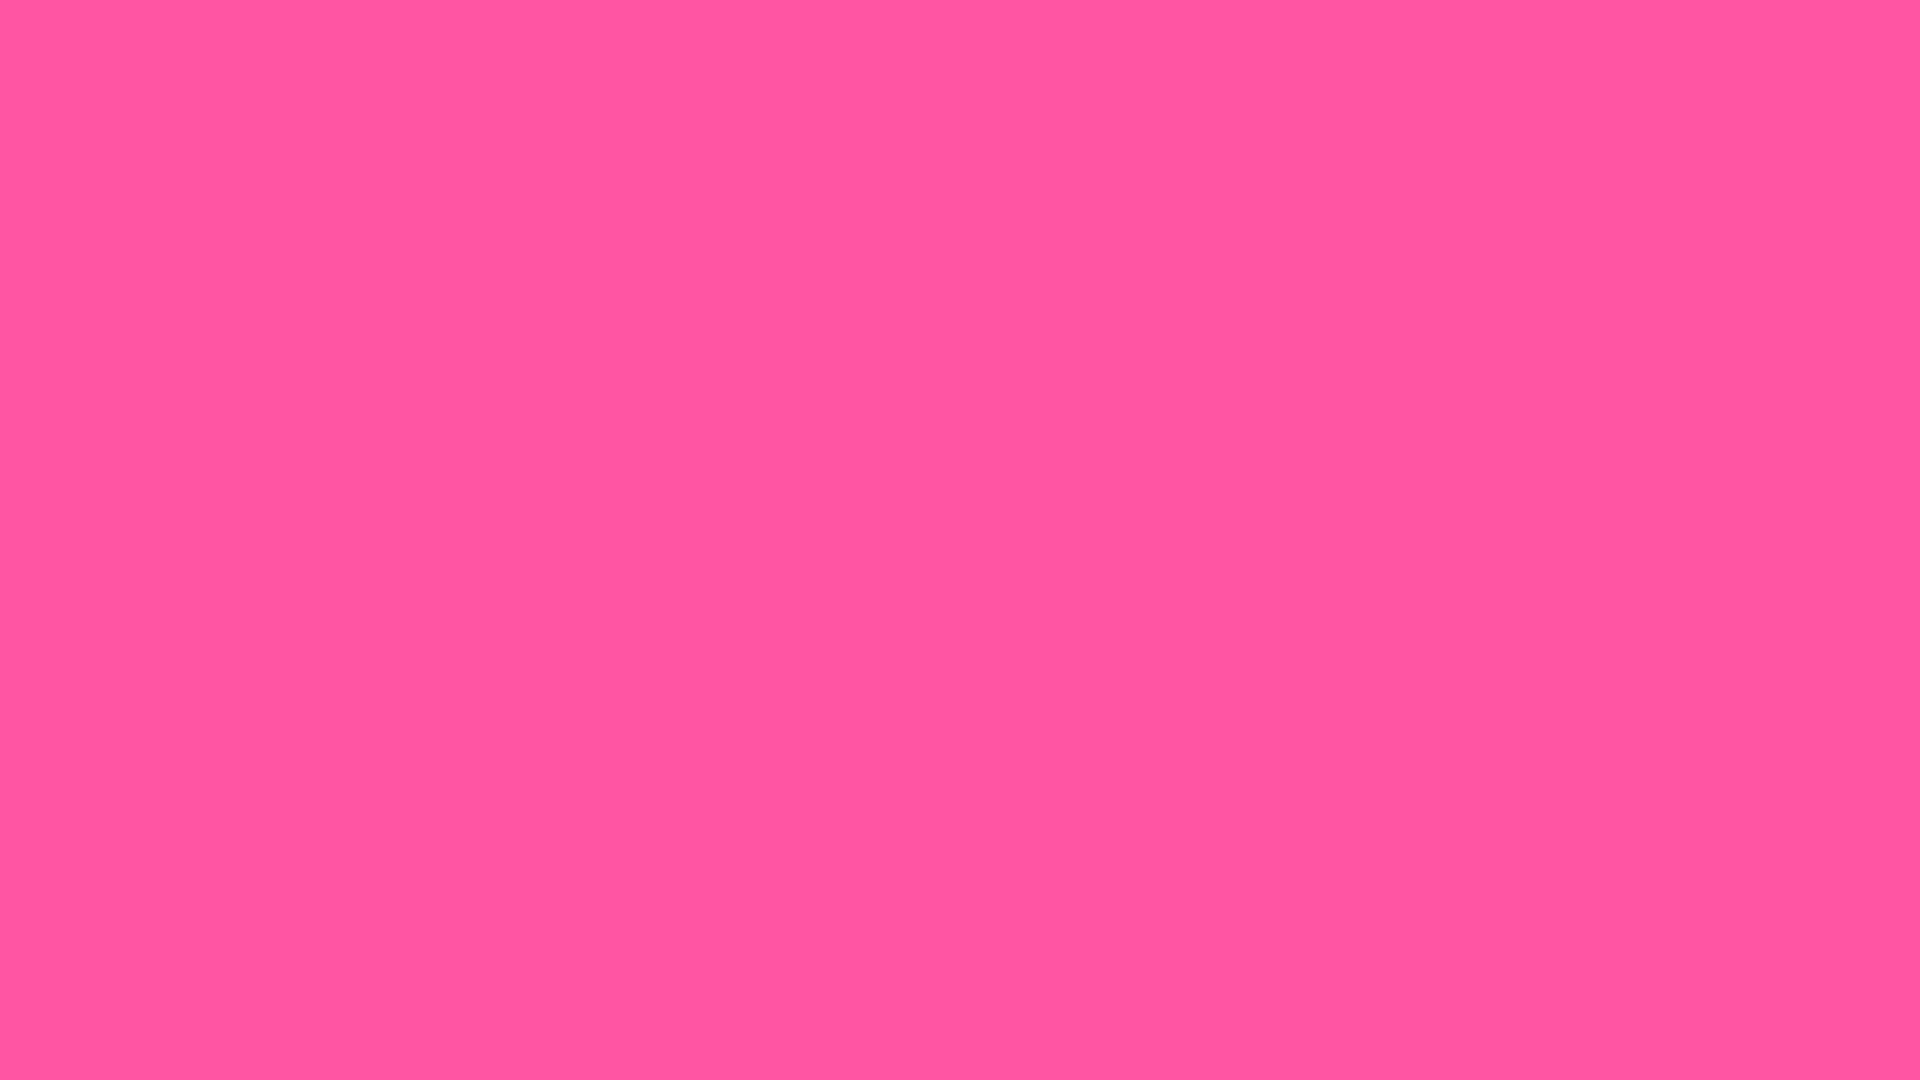 1920x1080 Brilliant Rose Solid Color Background